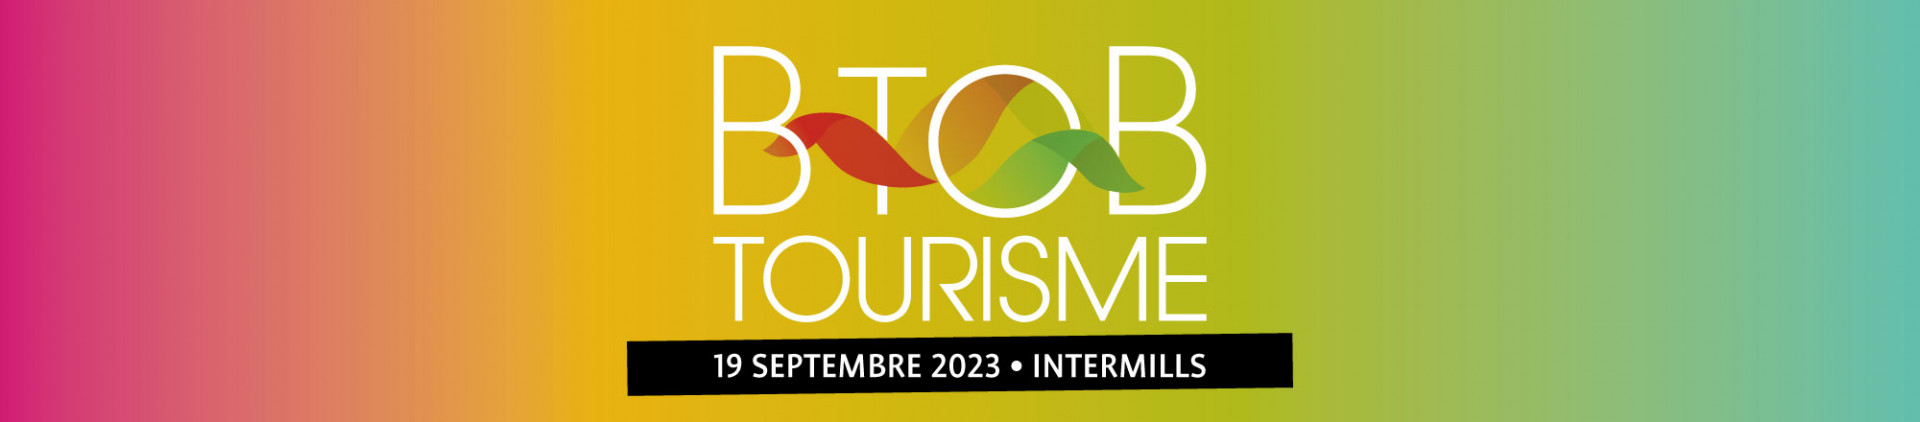 BTOB Tourisme 2023 - 19 septembre 2023 - Intermills